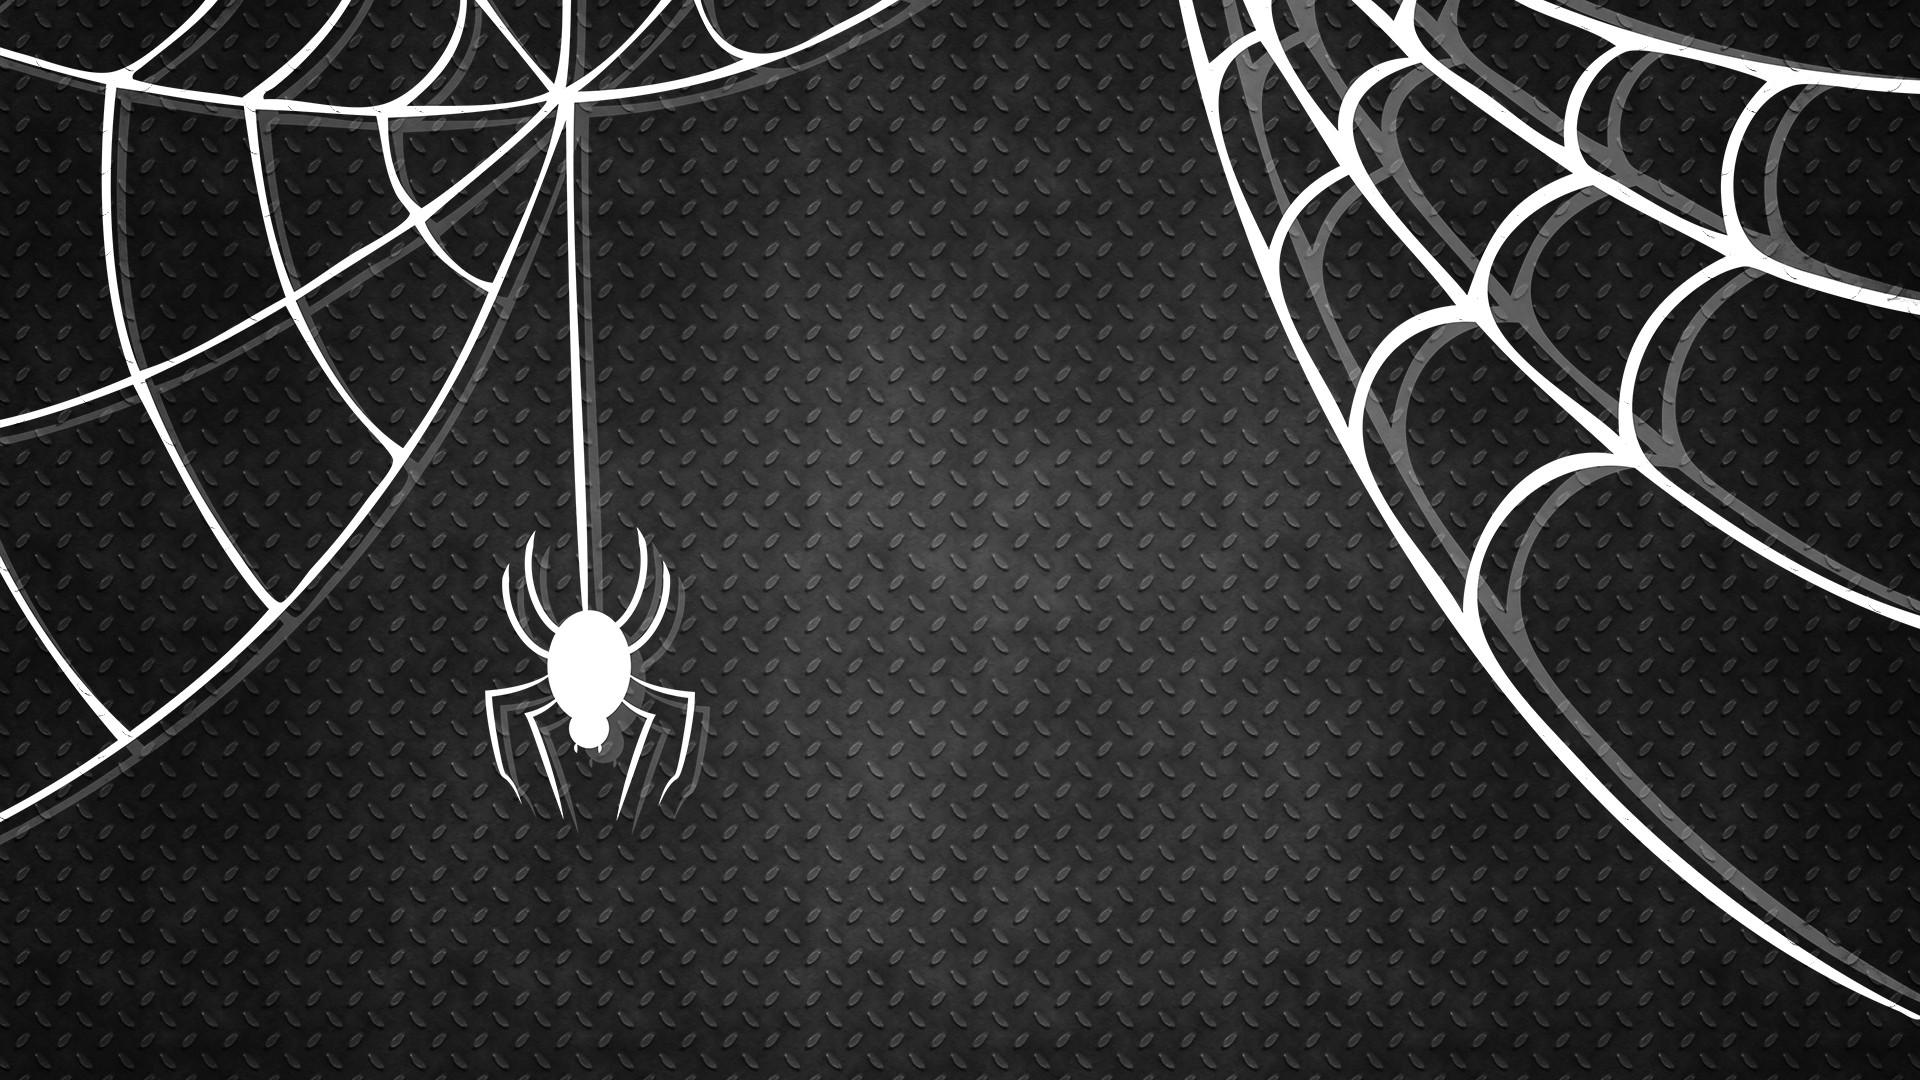 Halloween Spider Web Wallpaper HD 34787